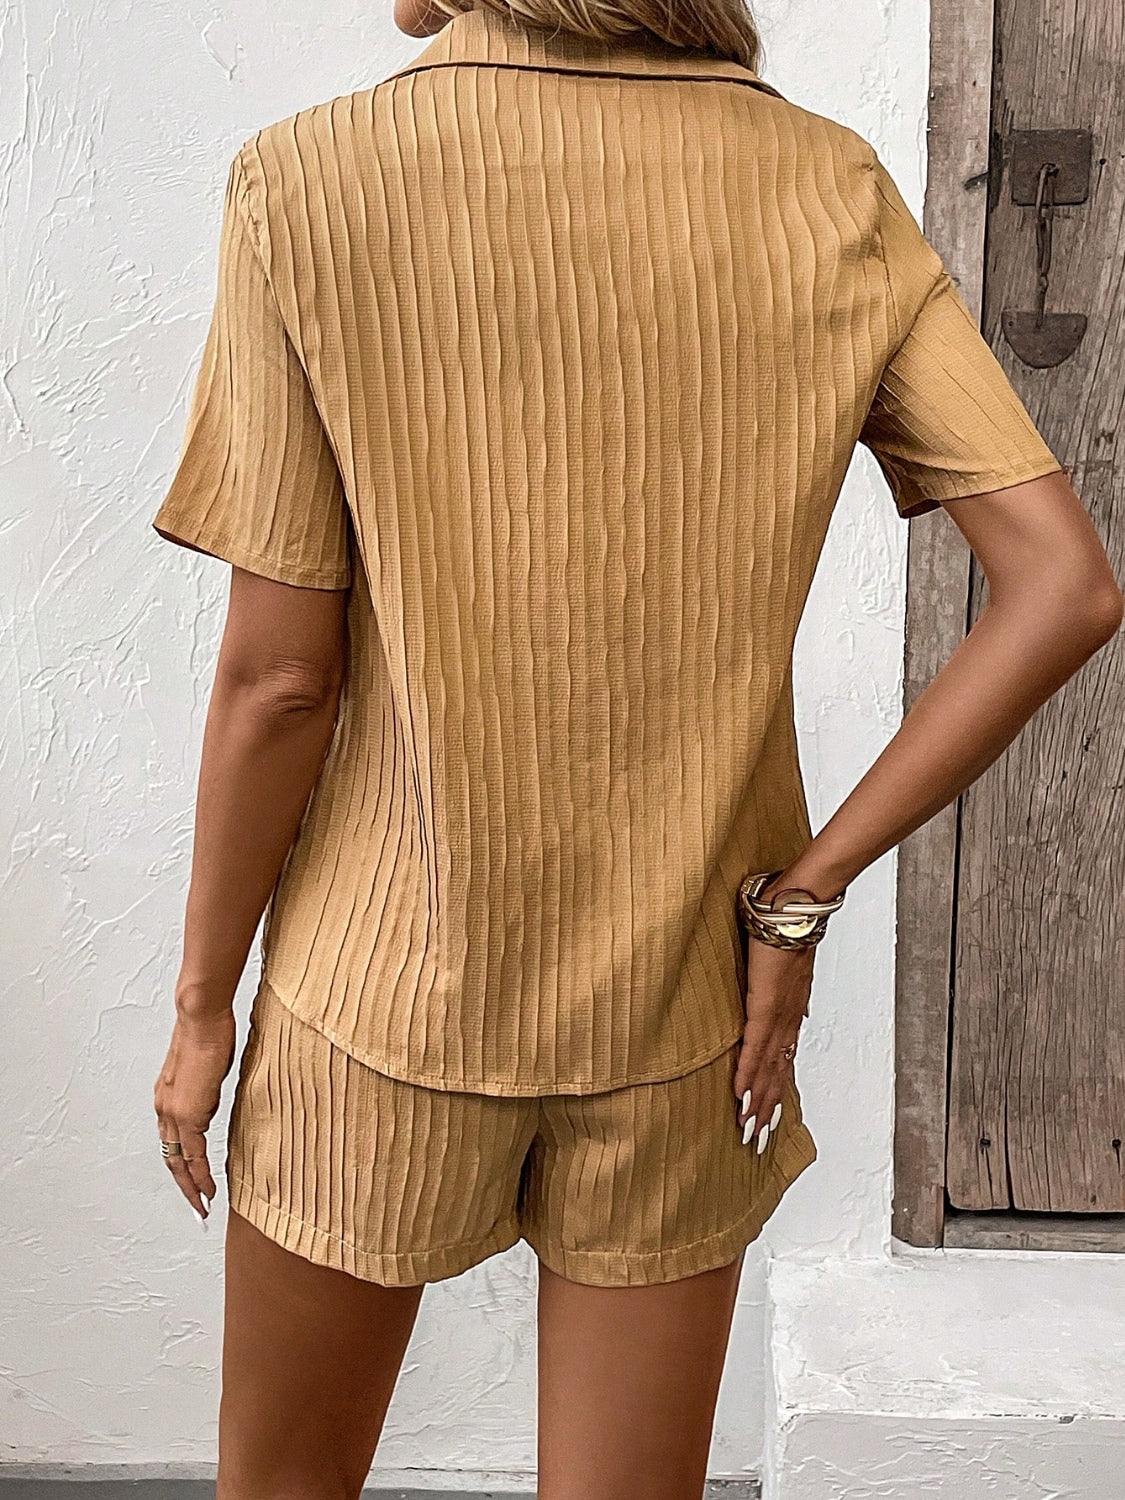 Elegant Beachwear Button Up Shirt / Shorts Outfit